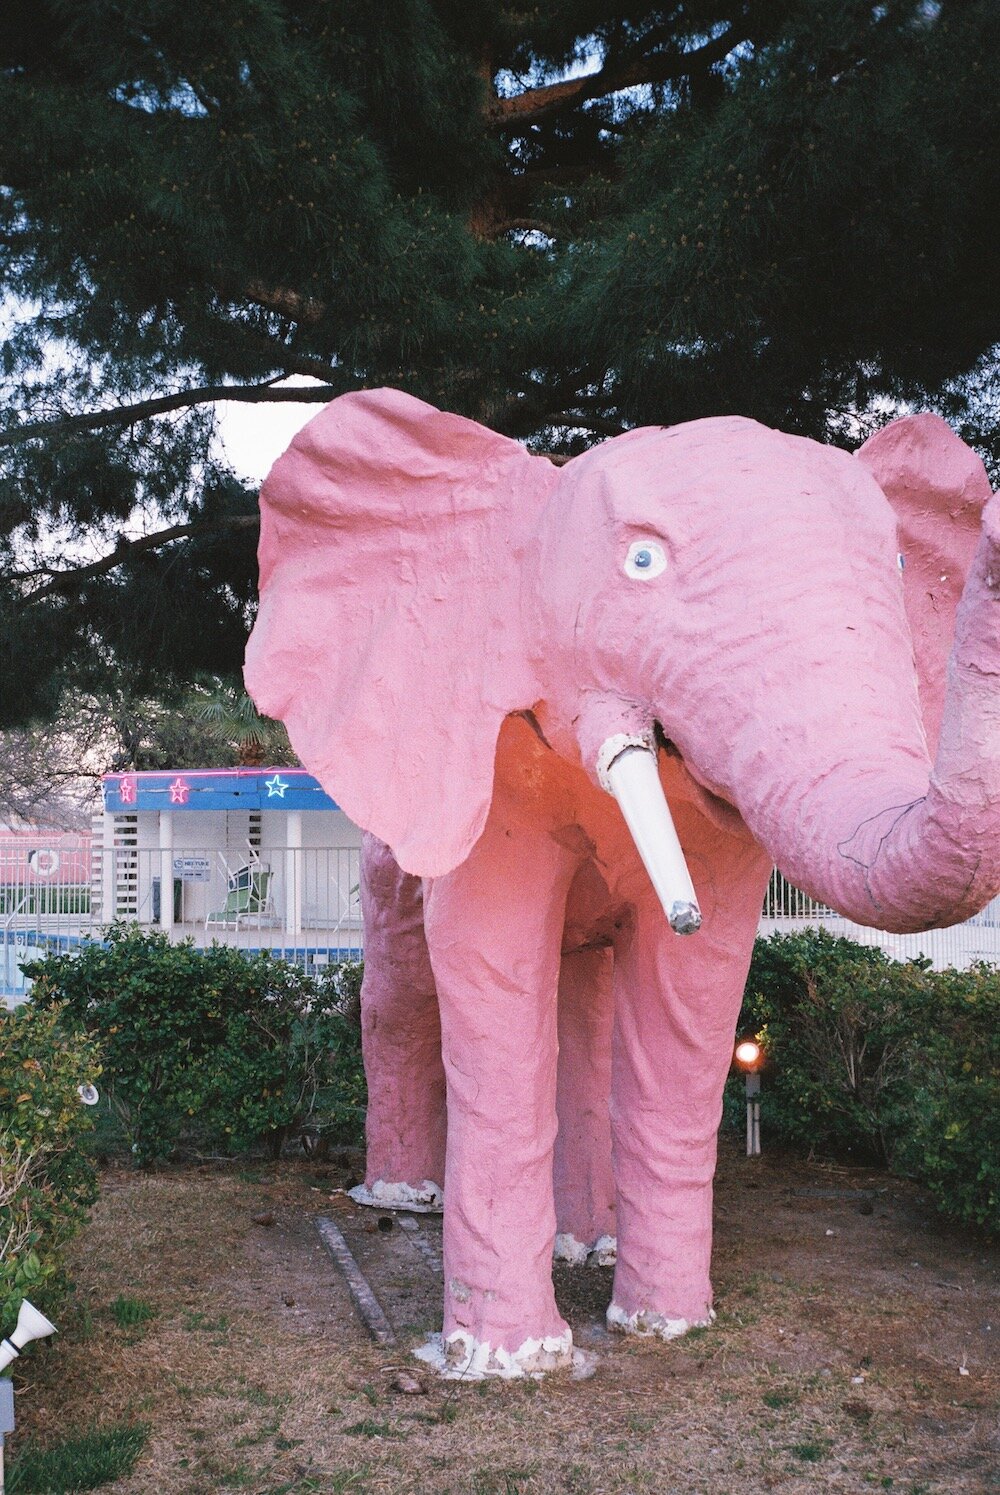 downtown las vegas wedding chapel pink elephant showgirl00011.jpeg